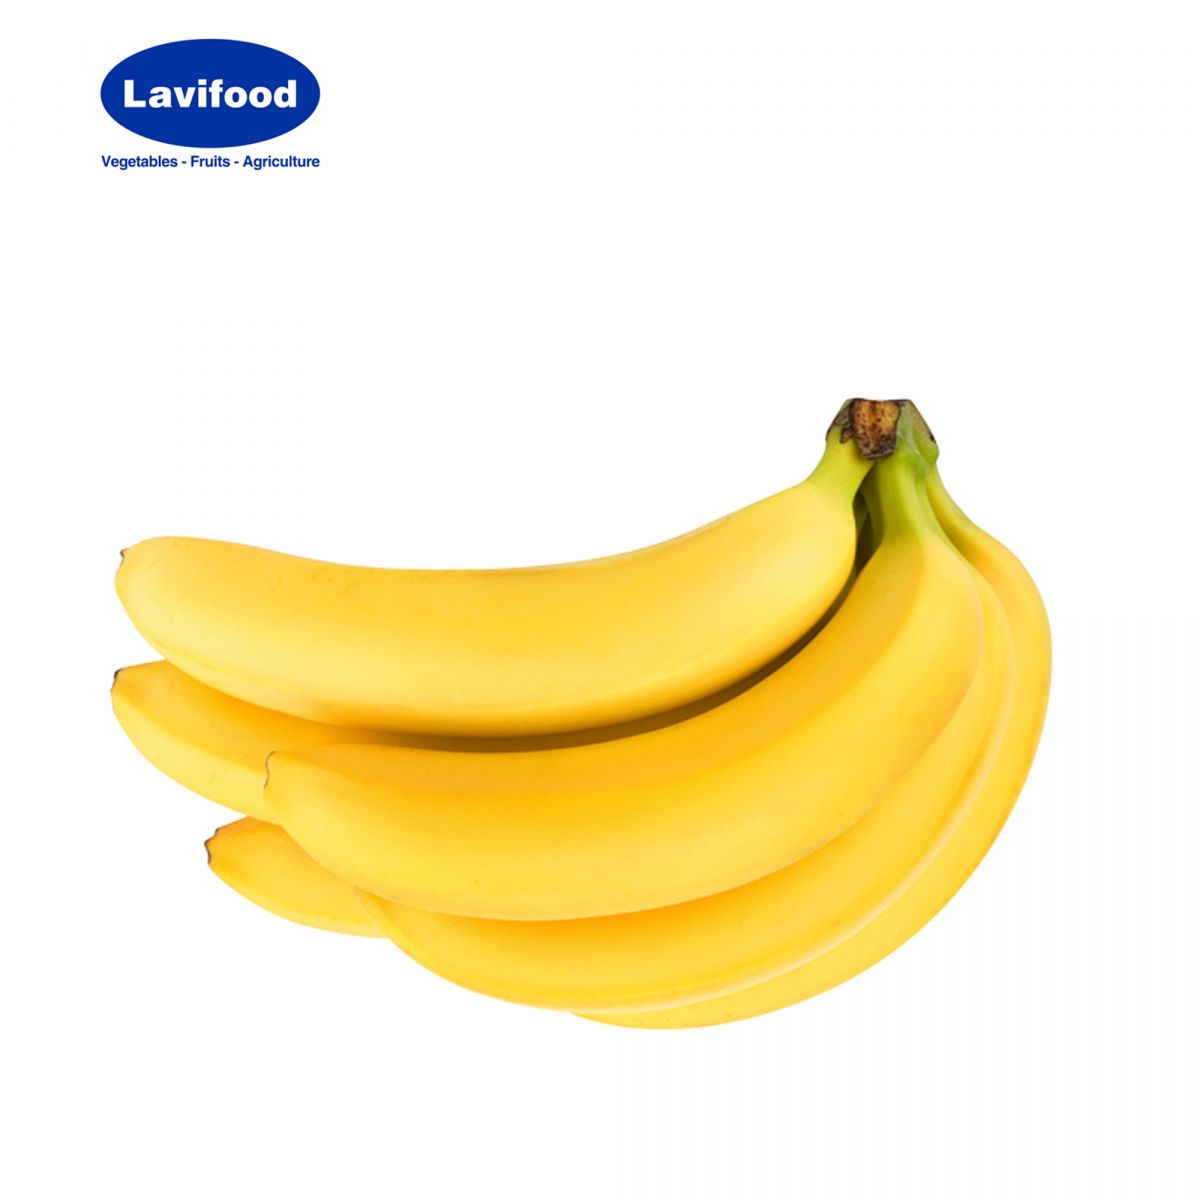 http://lavifood.com/en/products/fresh-fruits/banana